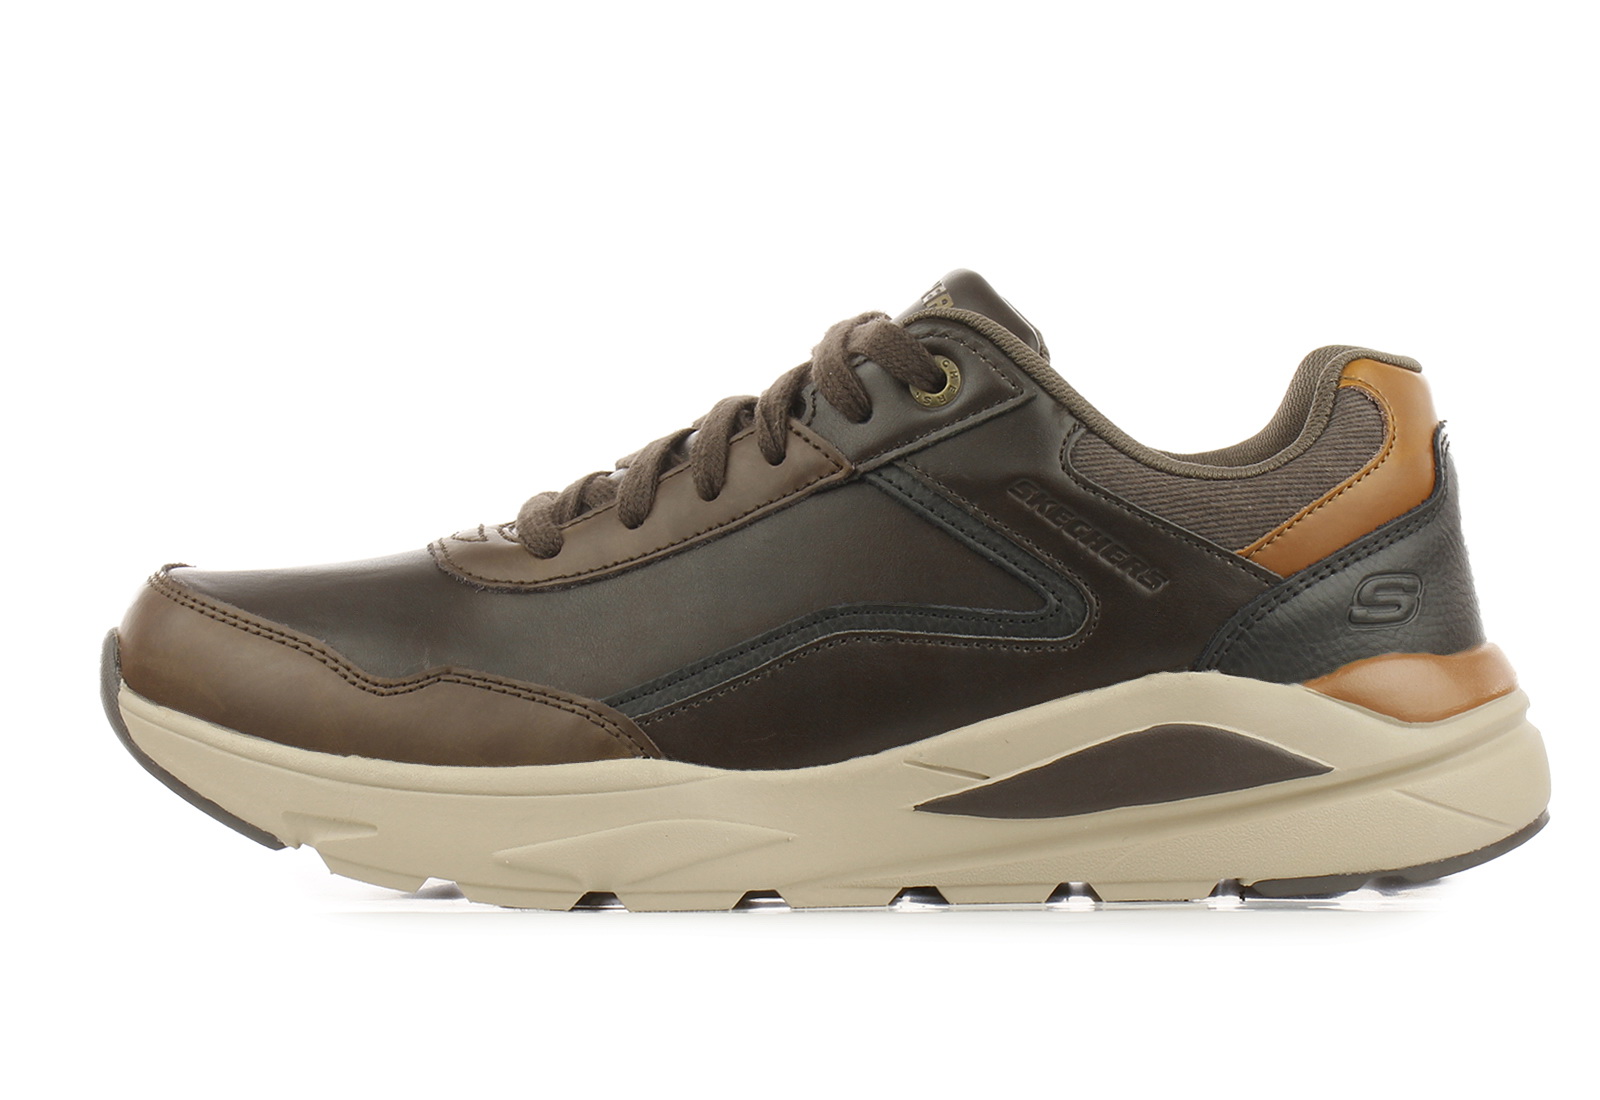 Skechers Sneakers - Verrado-crafton - 66274-DKBR - Online shop for sneakers, shoes boots